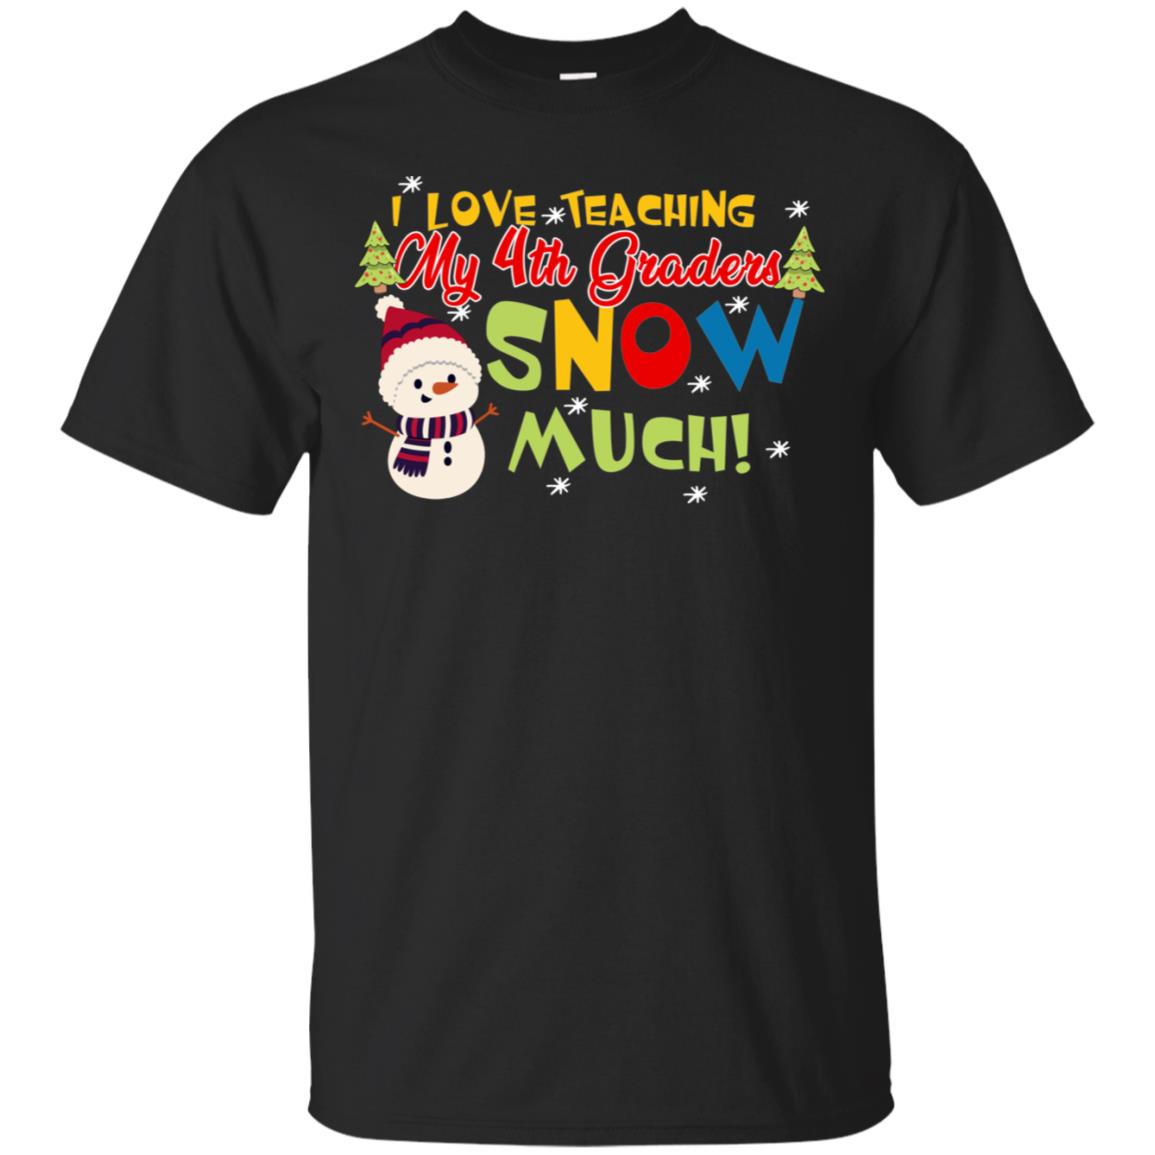 I Love Teaching My 4th Graders Snow Much X-mas Gift Shirt For TeachersG200 Gildan Ultra Cotton T-Shirt